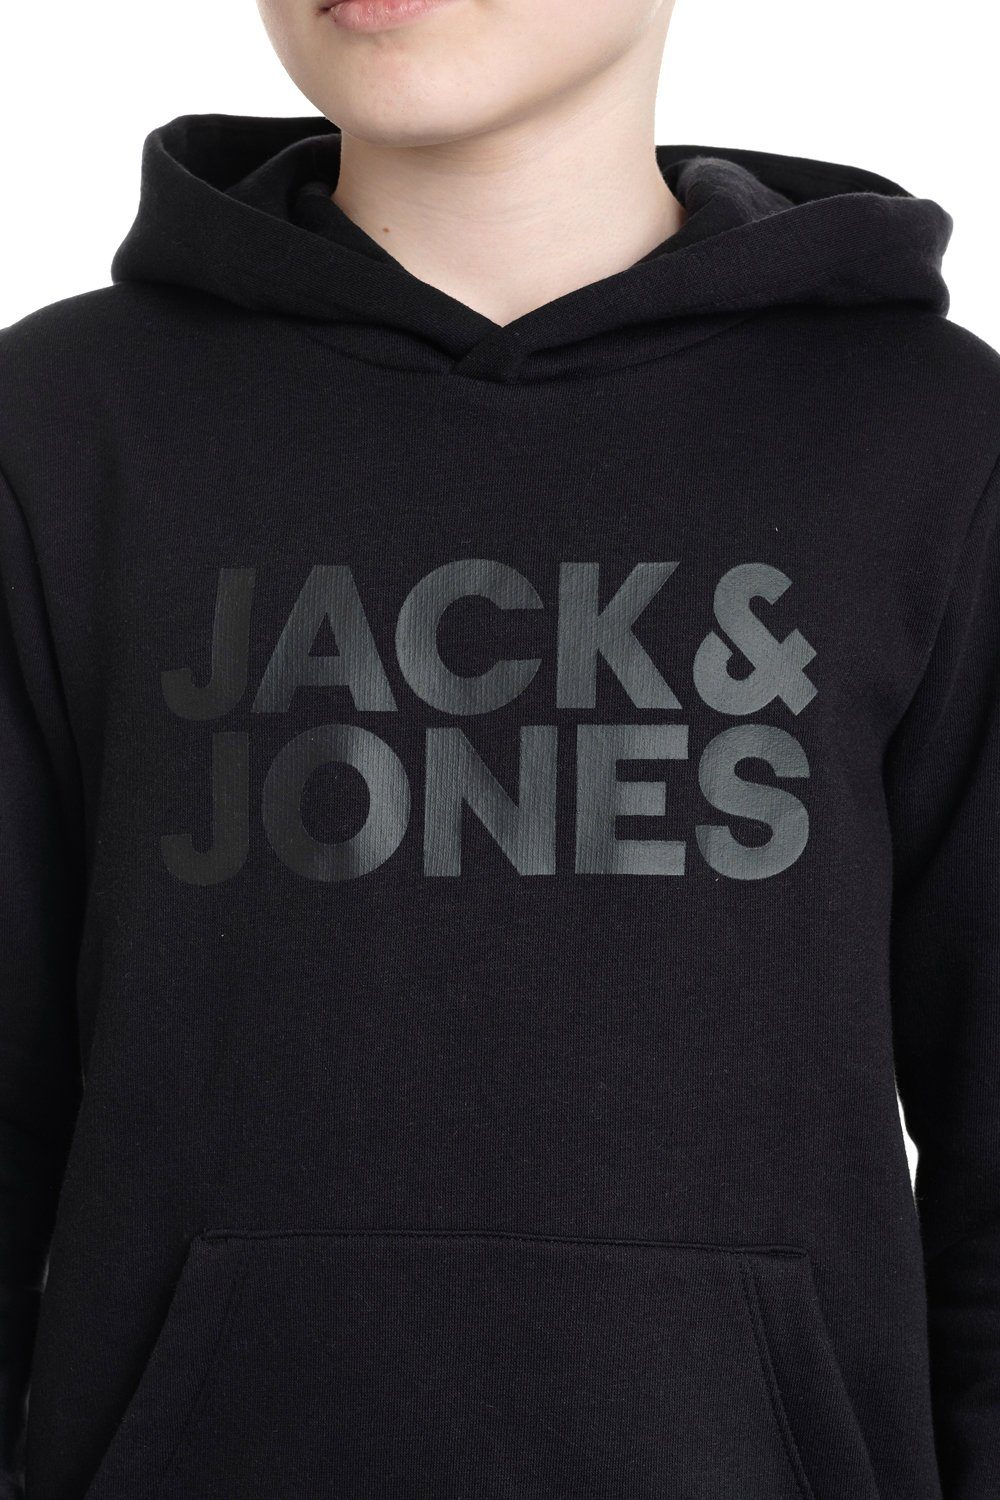 Kapuzenpullover Black-Asphalt Jack & Unifarbe Junior Jones